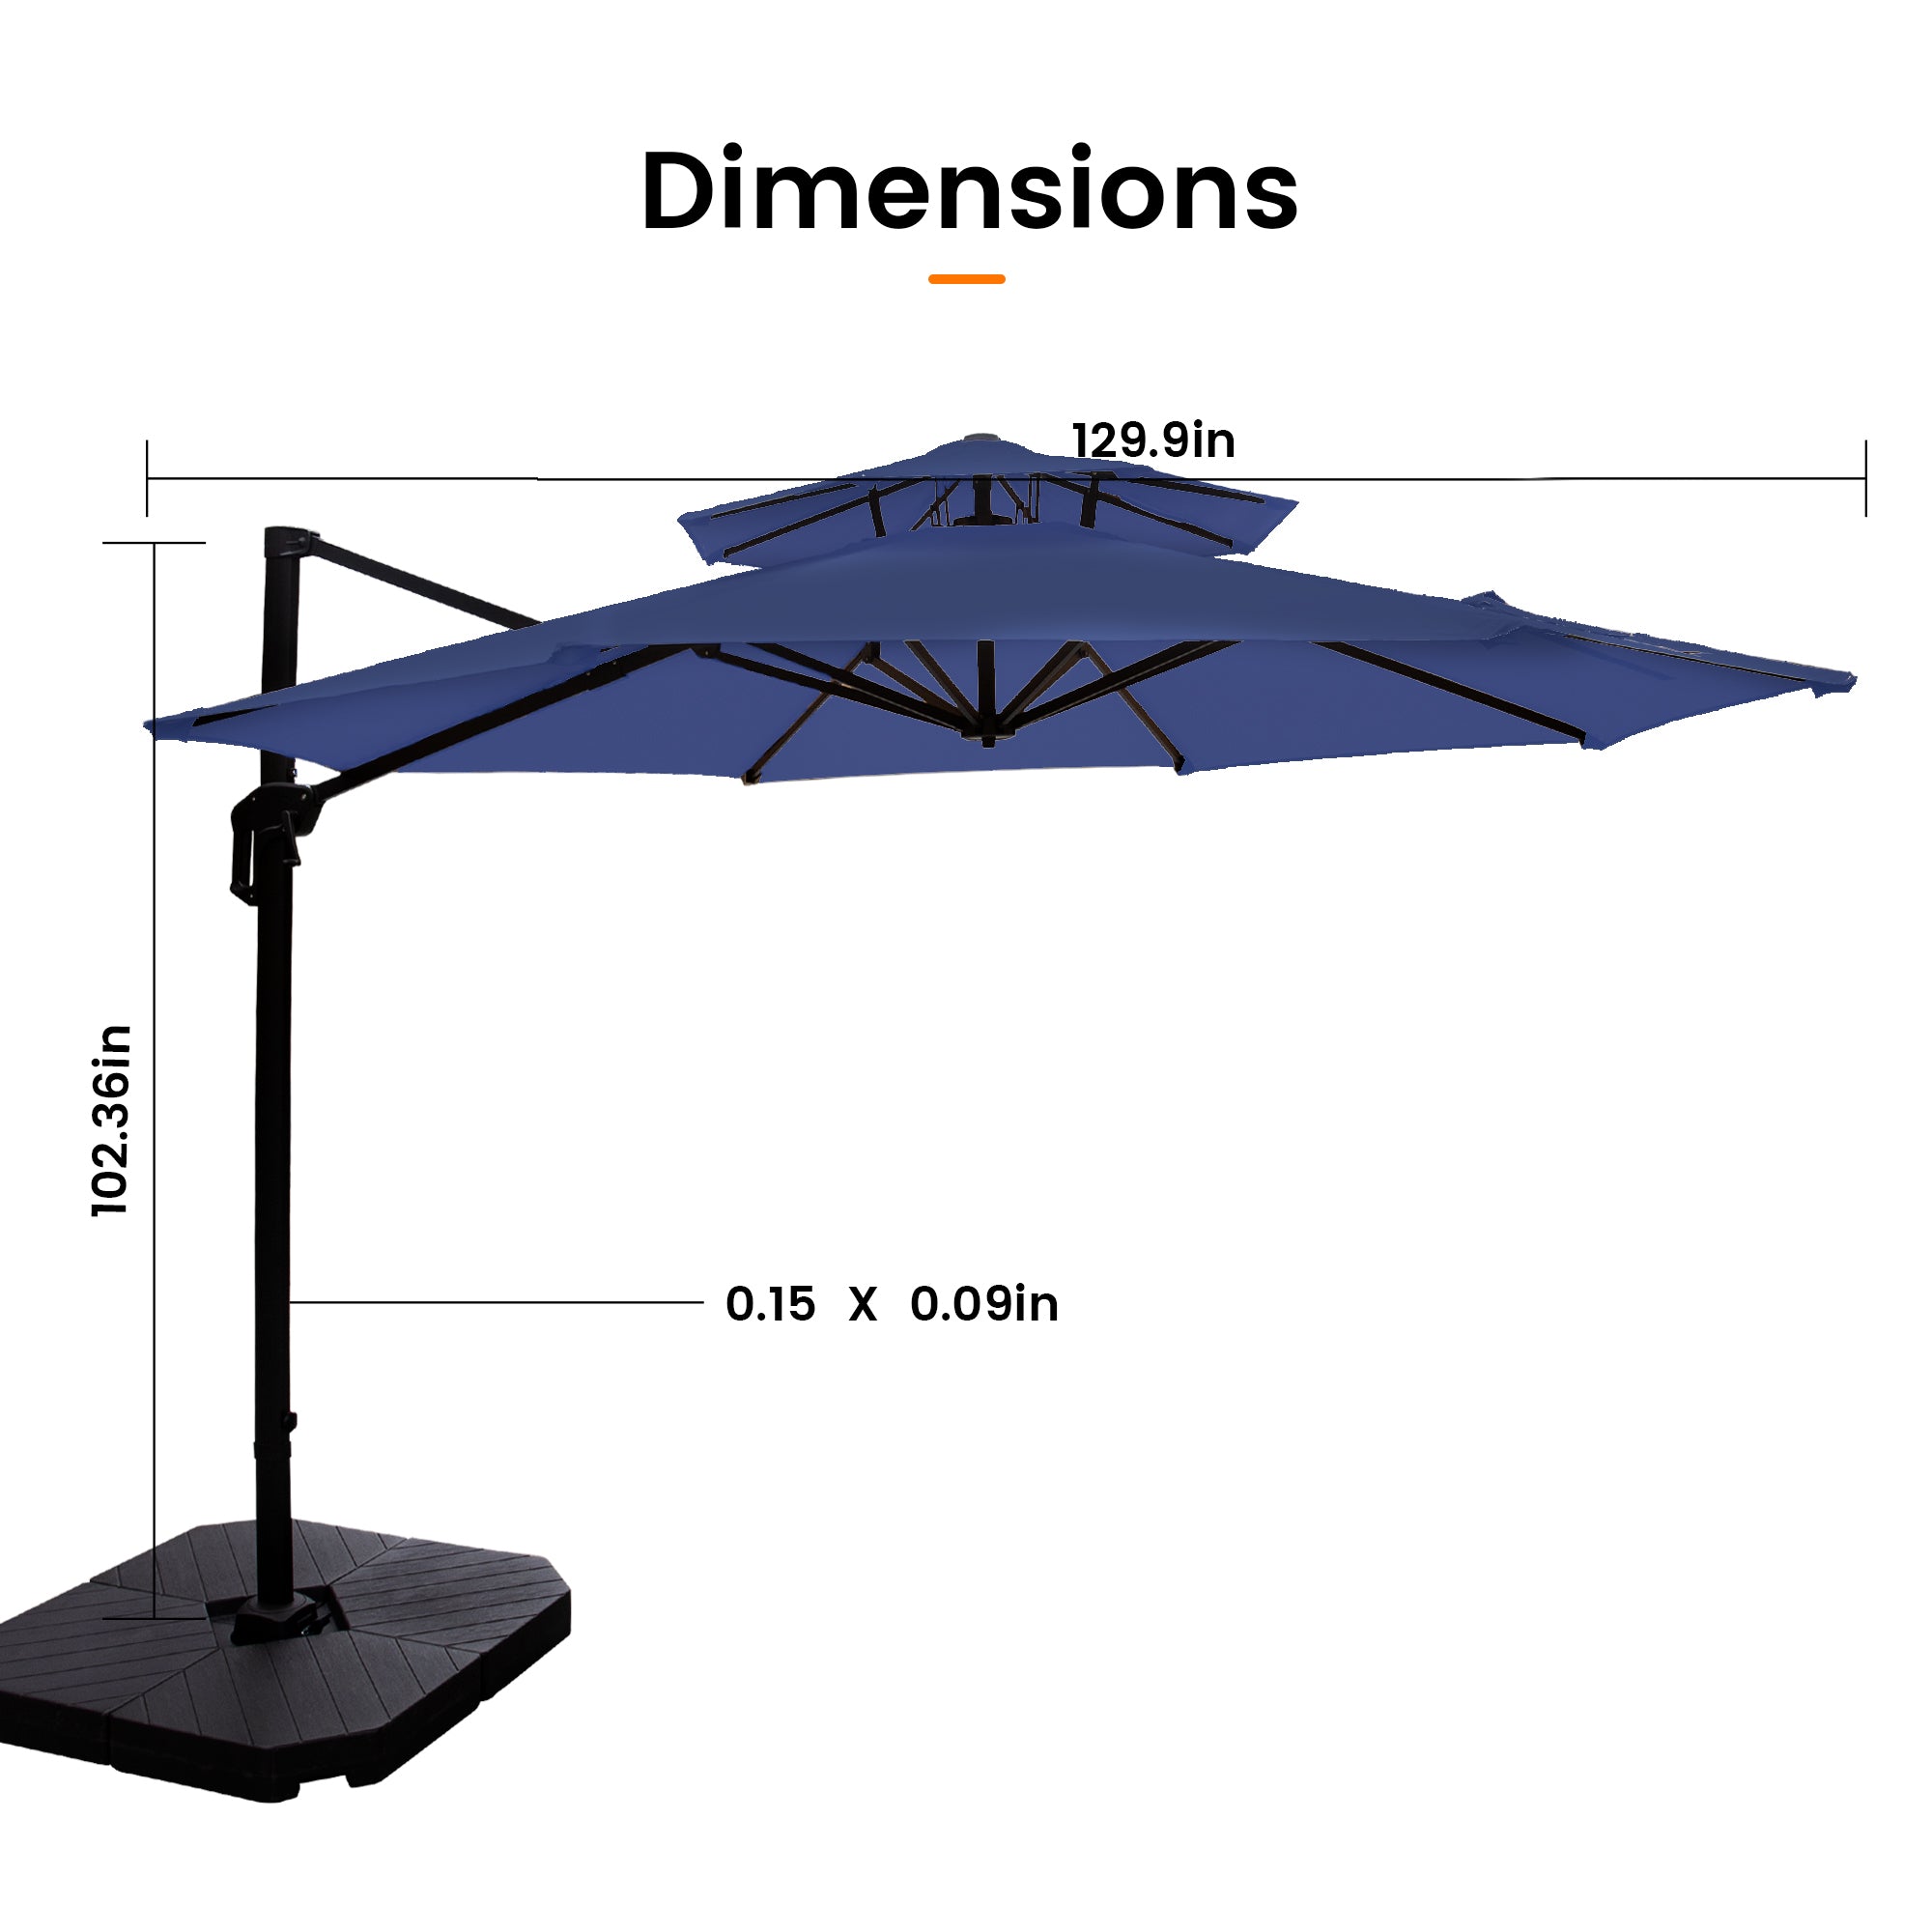 Olilawn 11ft Patio Umbrella Outdoor Round Umbrella with Double Top